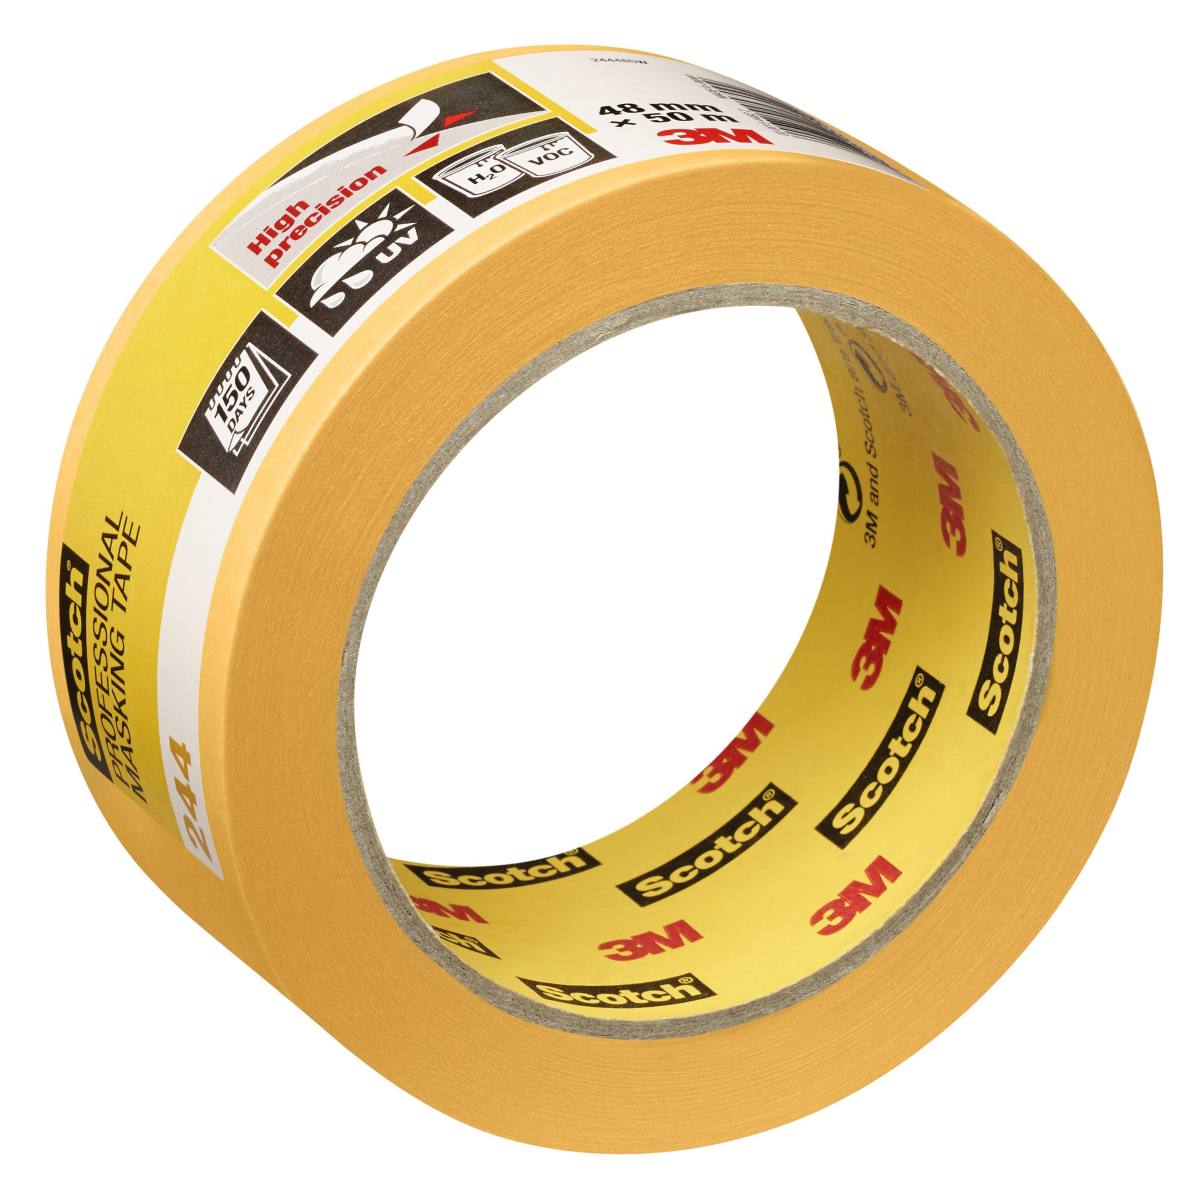 3M 244 Masking tape-gold 30mmx50m - shrink-wrapped